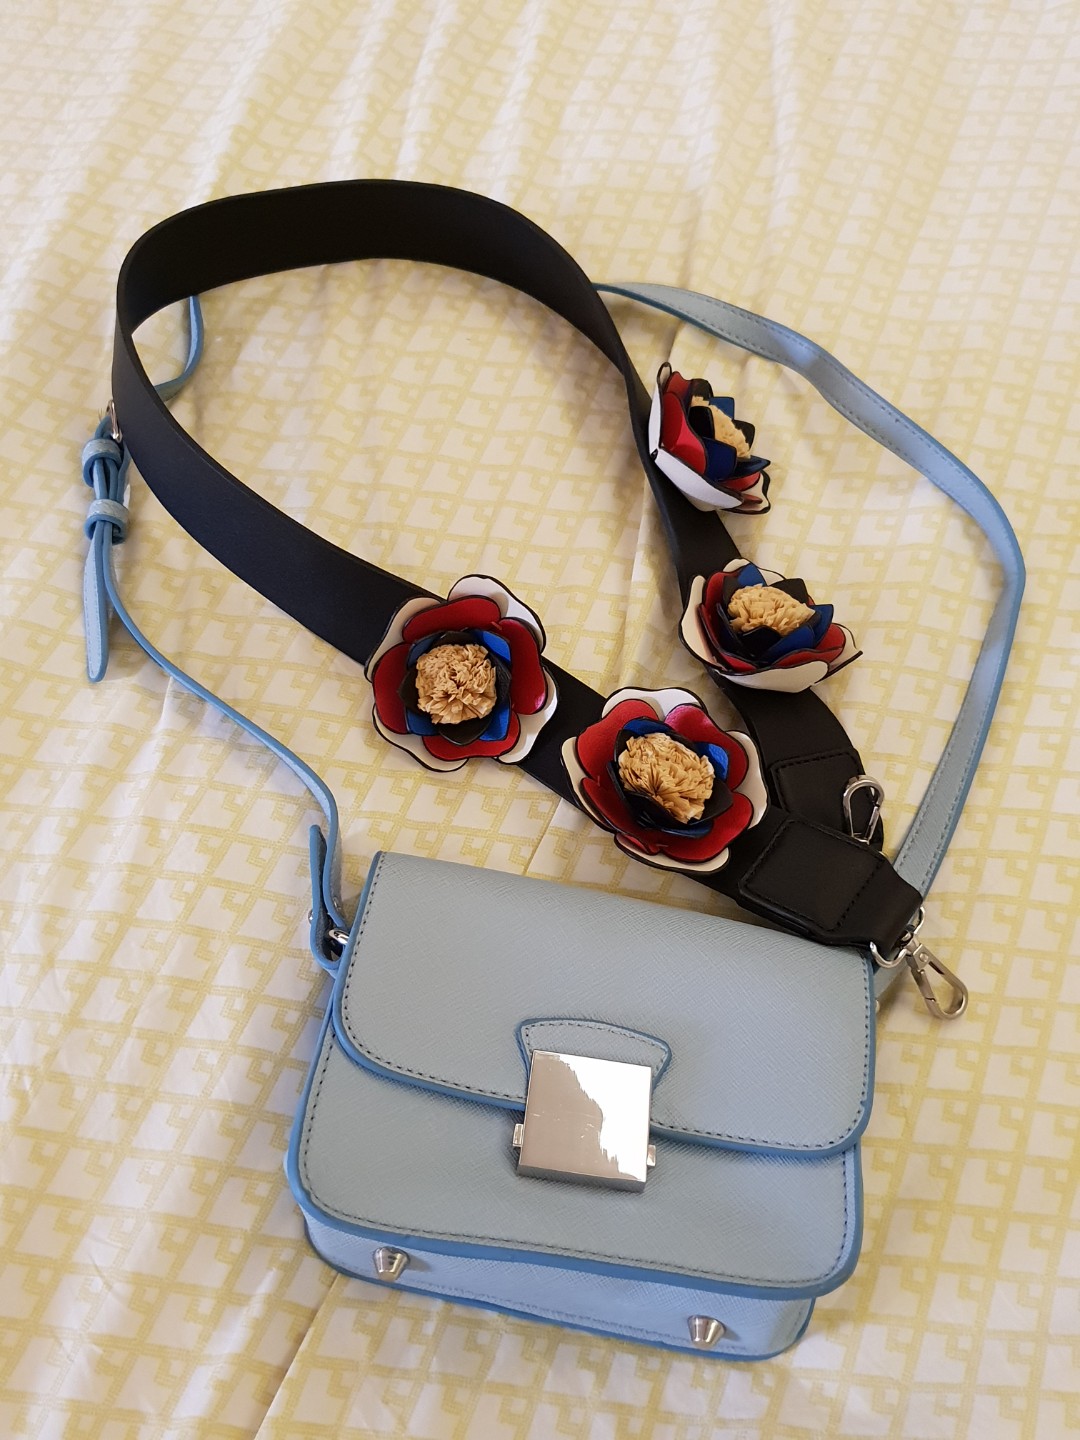 zara crossbody bag with floral strap